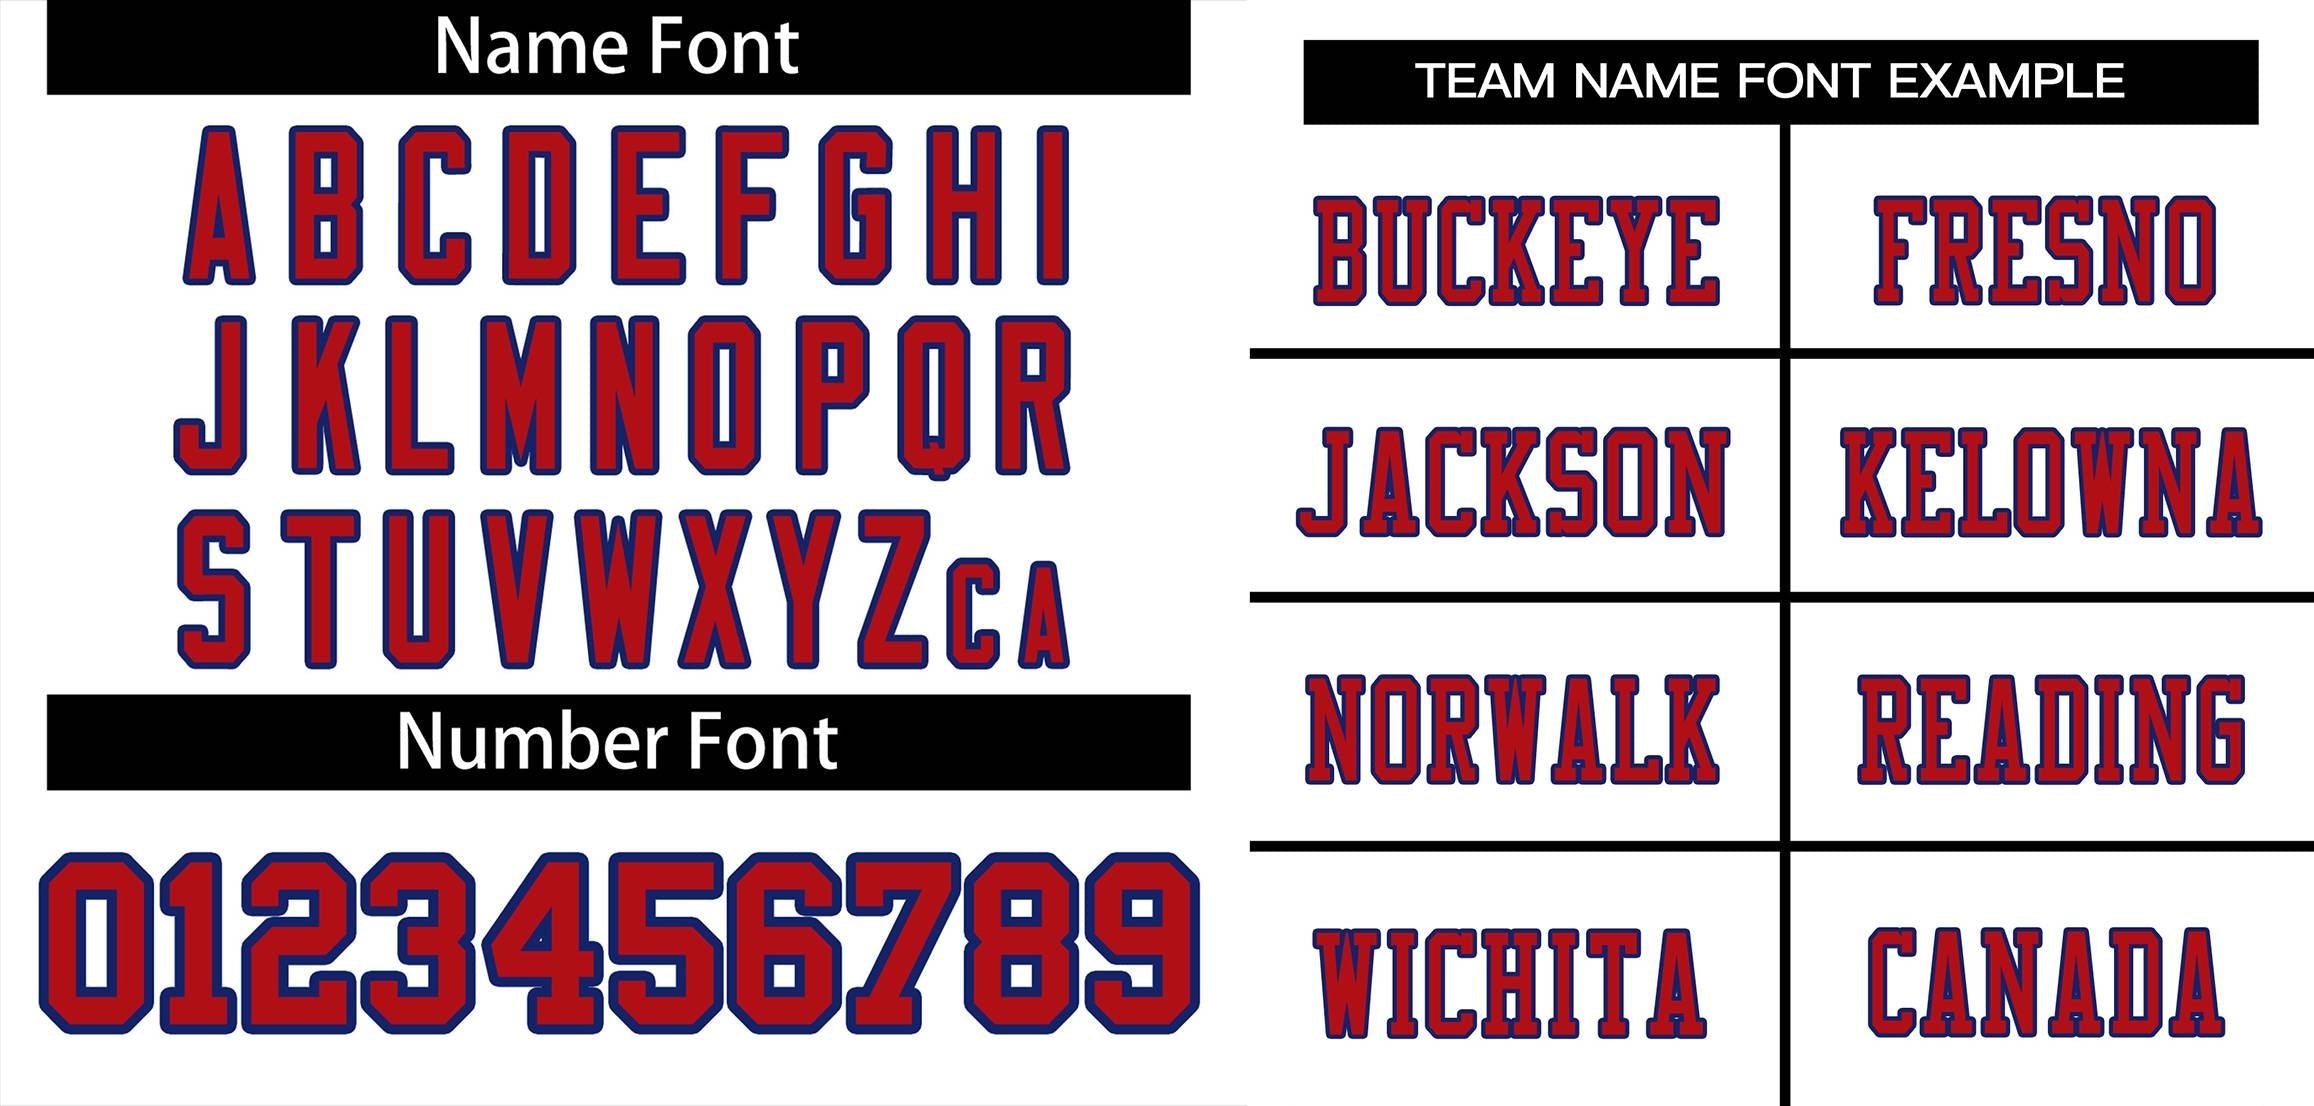 custom football shirts name font